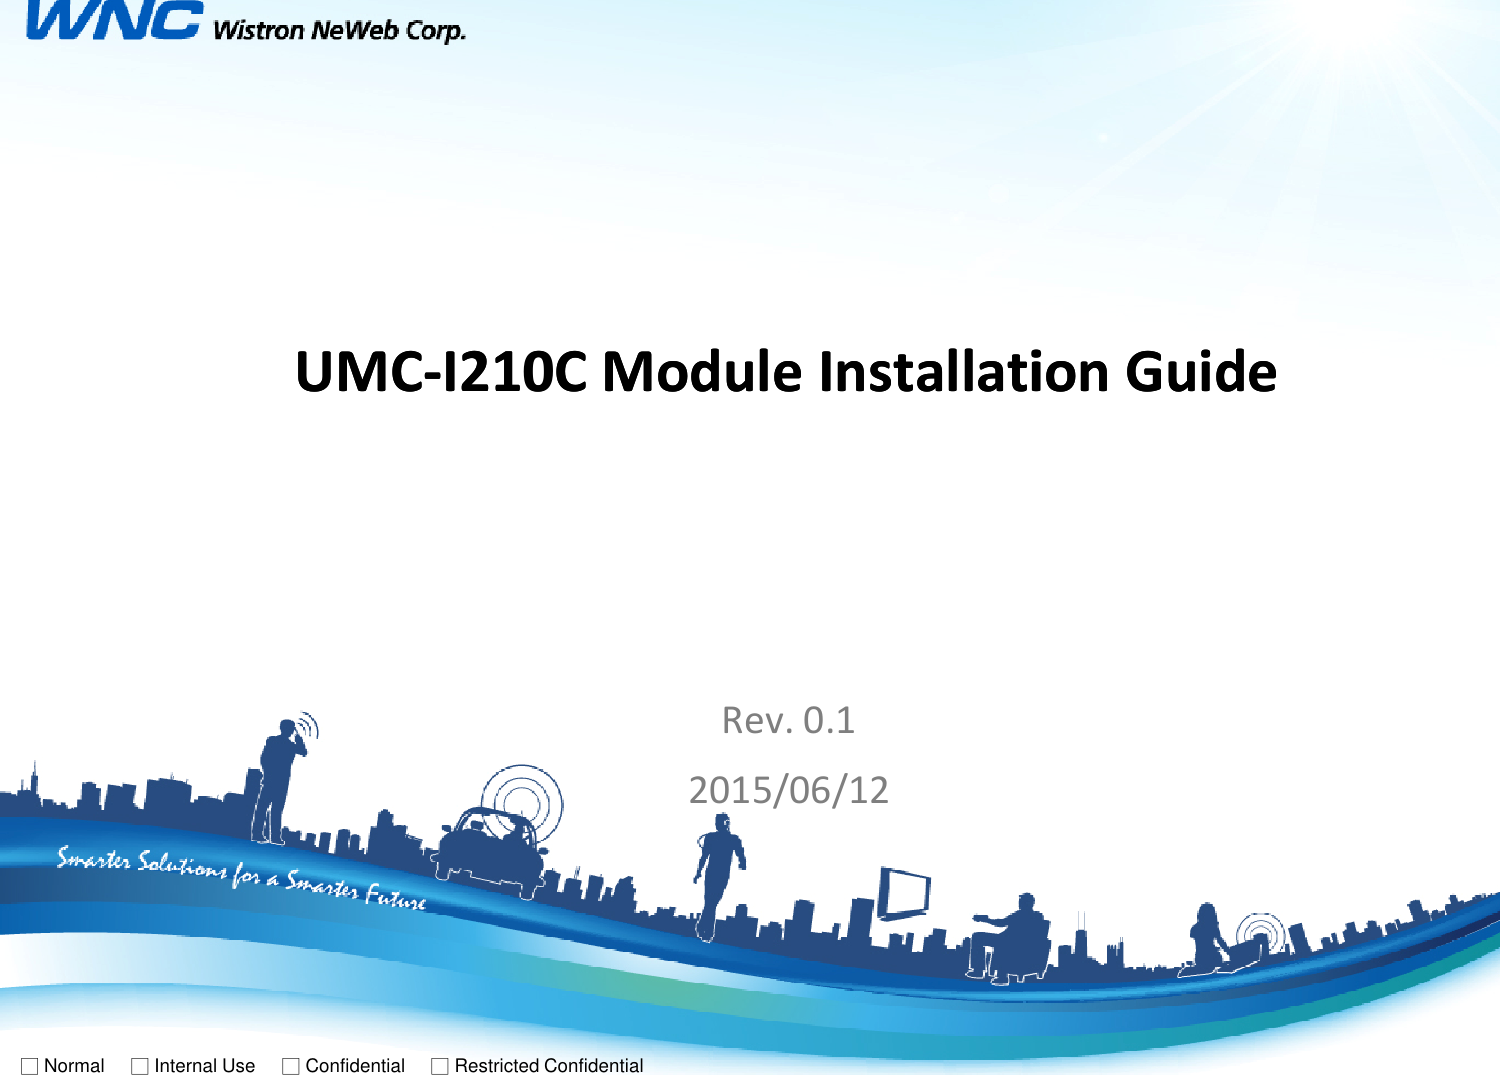 UMCUMC--I210C Module Installation GuideI210C Module Installation Guide□Normal     □Internal Use  □Confidential  □Restricted ConfidentialRev. 0.12015/06/12